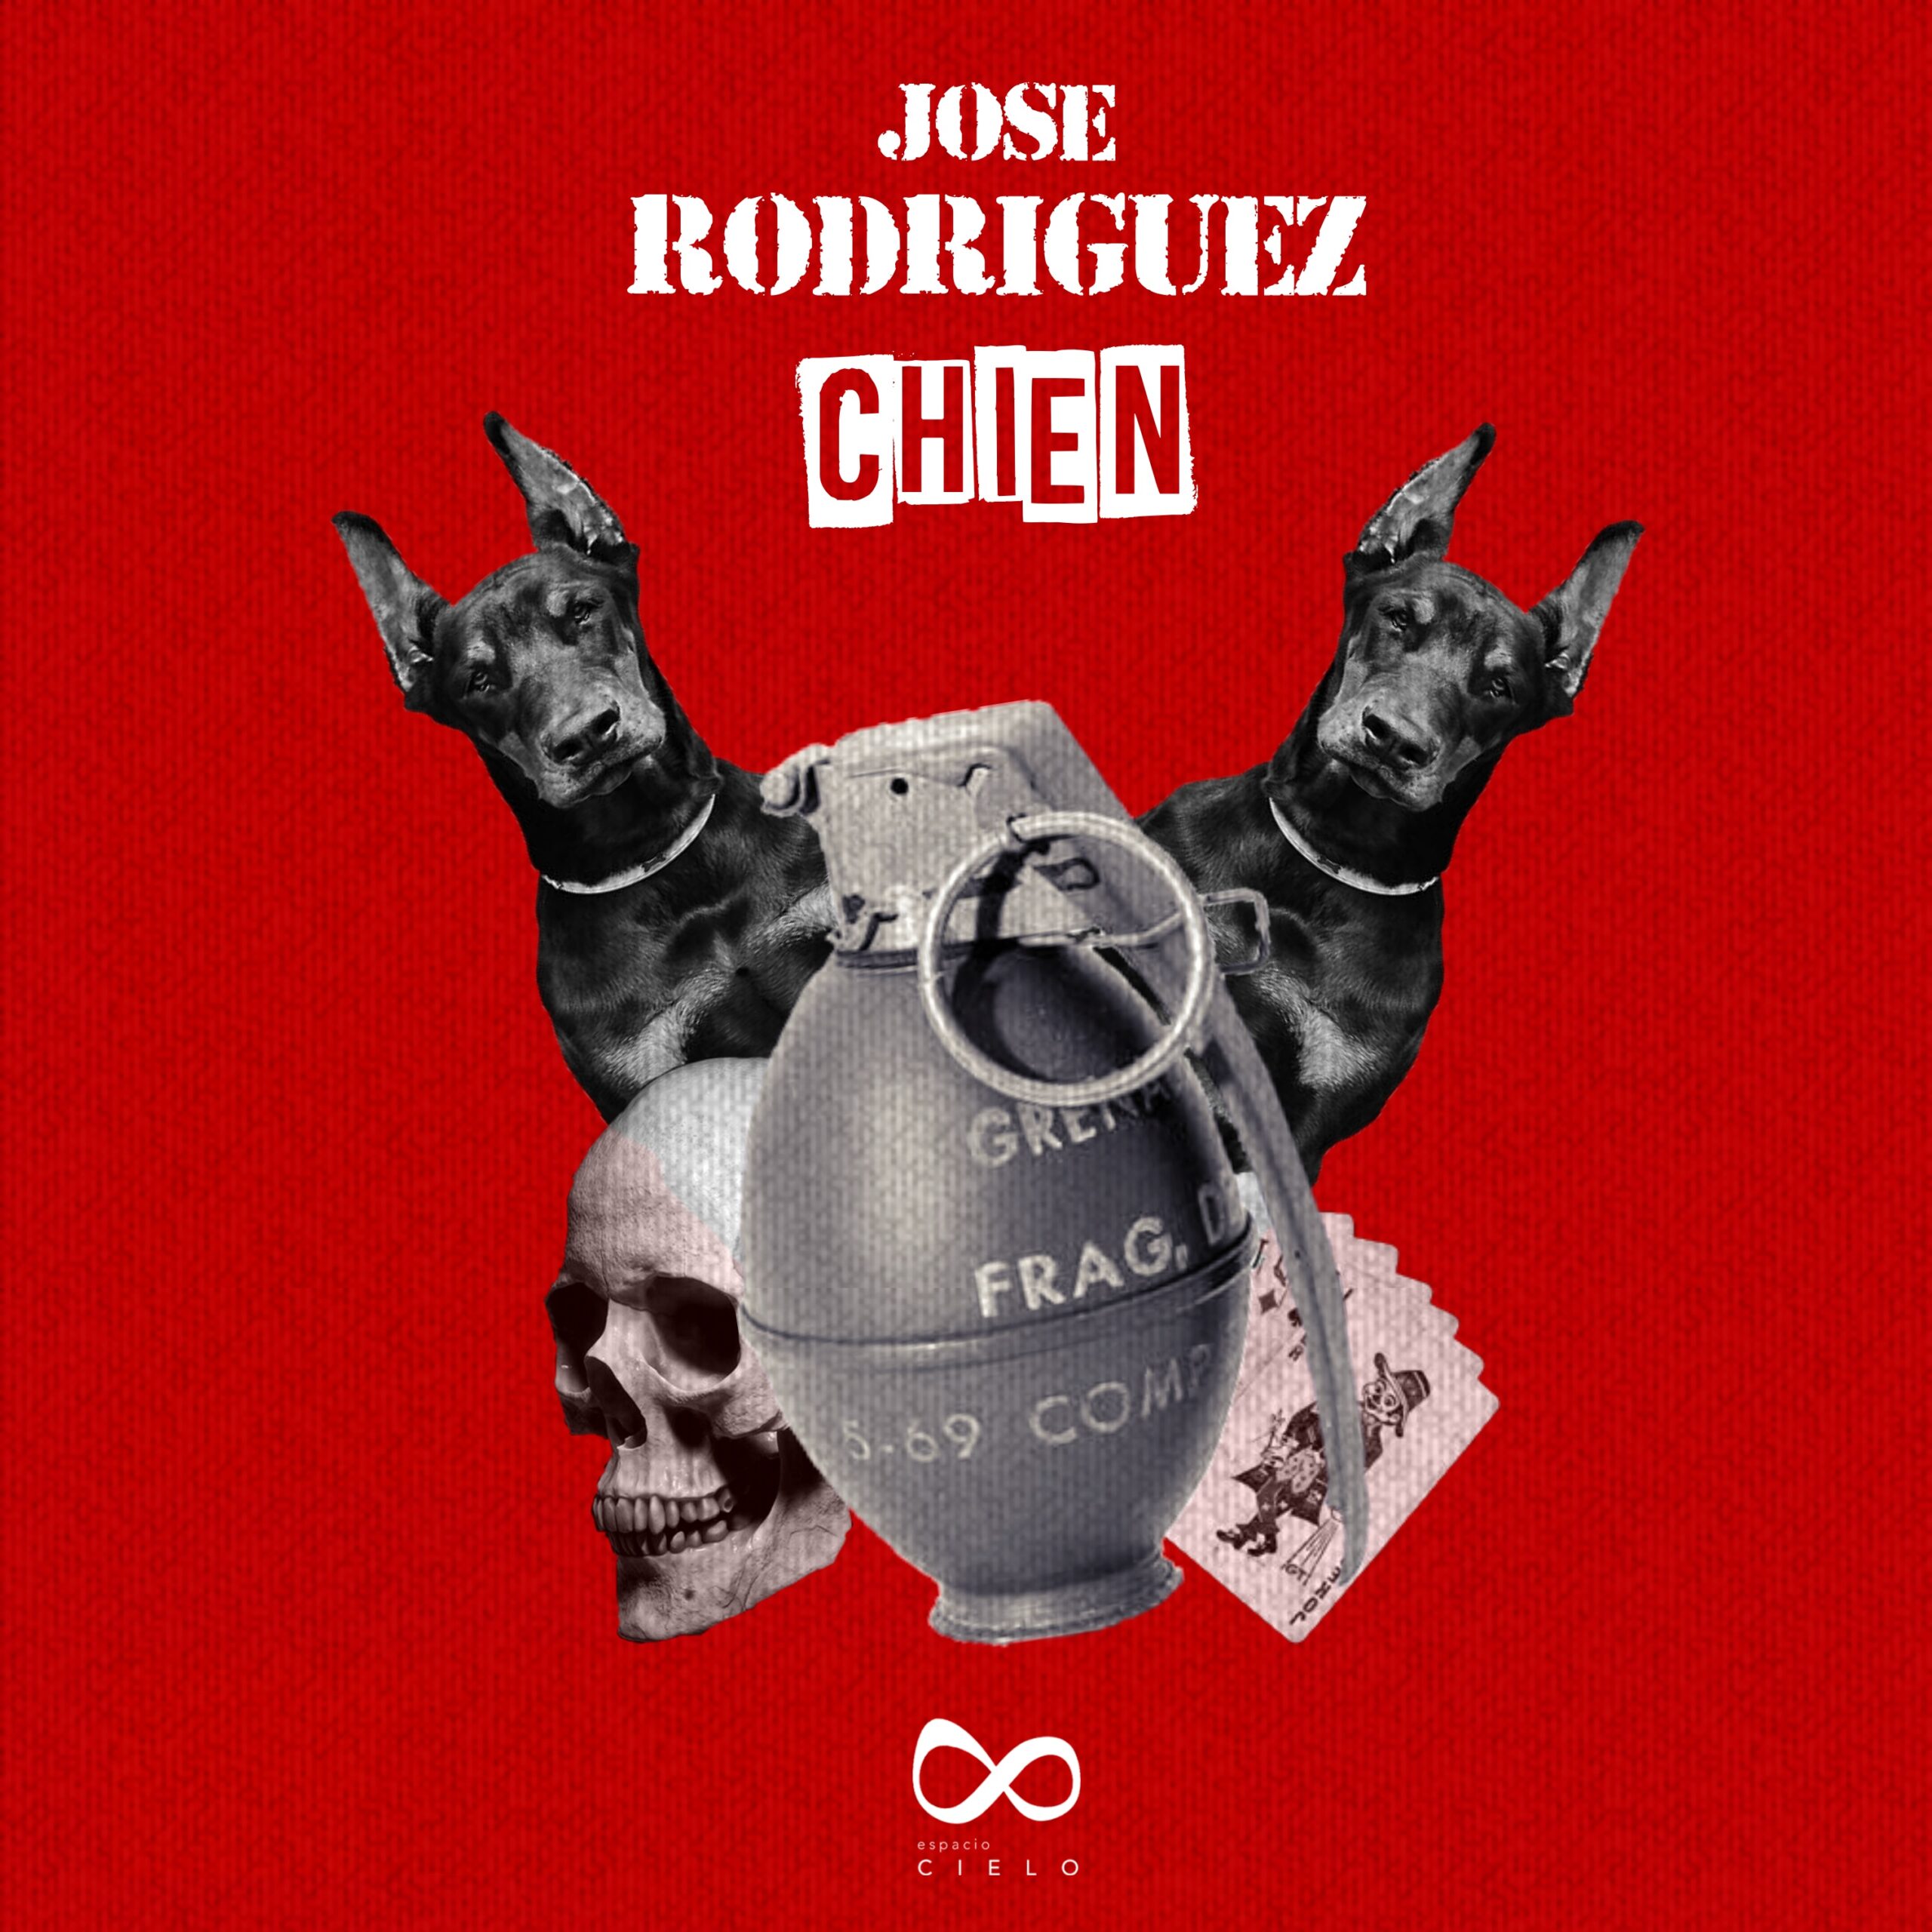 PREMIERE: Jose Rodriguez - Chien (Sylphomatic Remix) [Espacio Cielo]